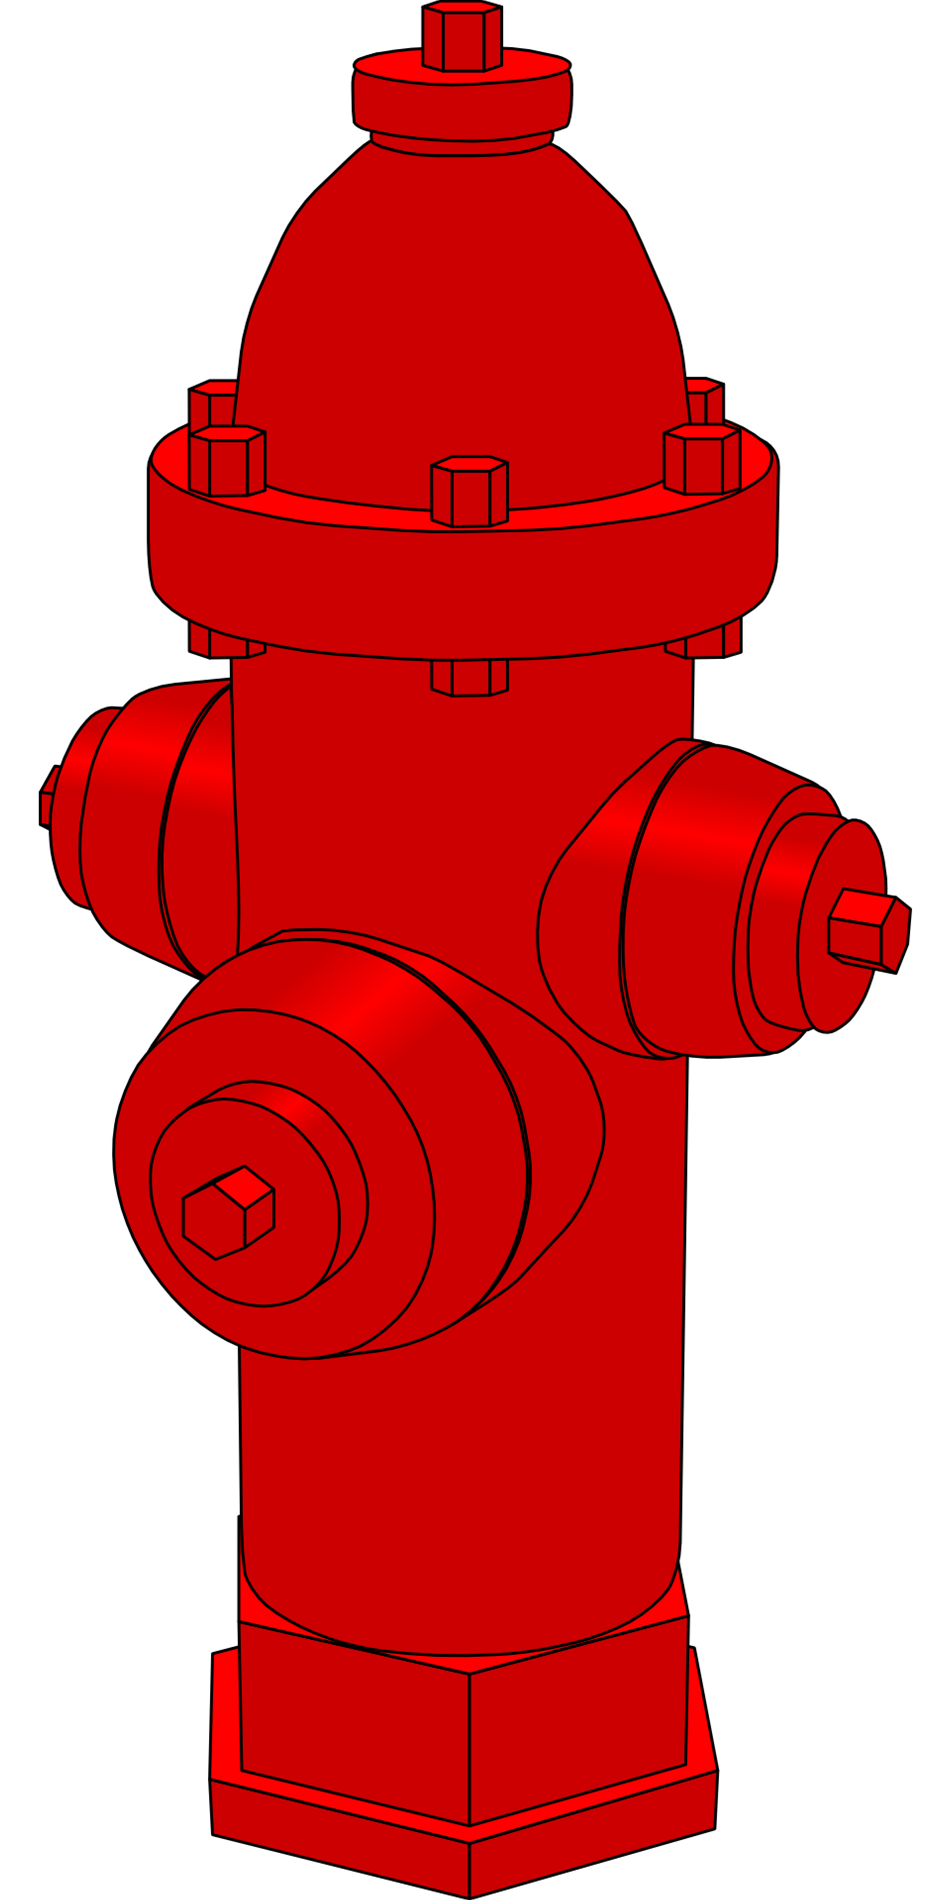 Hydrant drawing